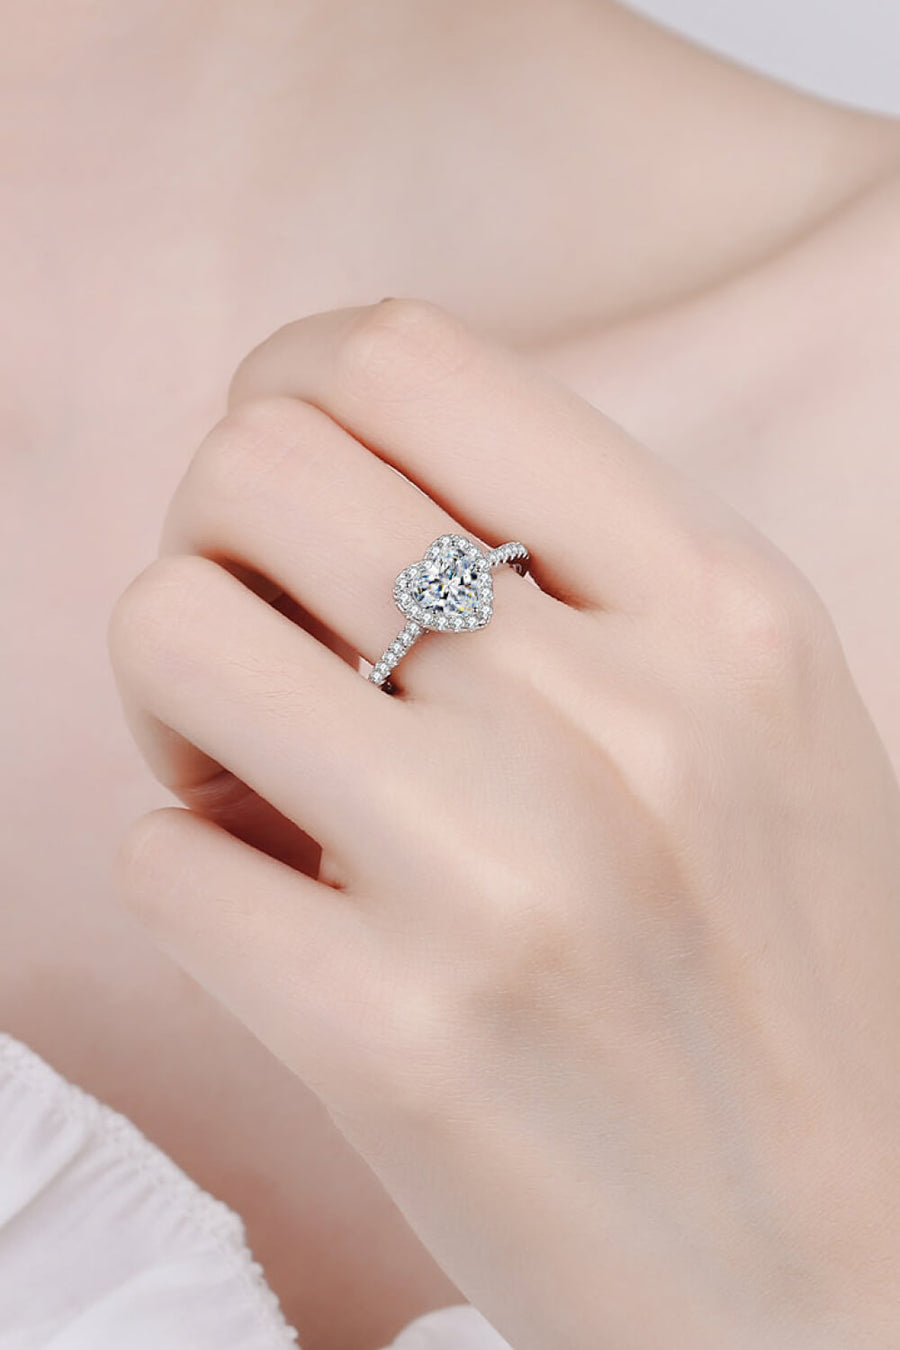 Best Diamond Ring Jewelry Gifts for Women | 1 Carat Heart-Shaped Diamond Ring | MASON New York